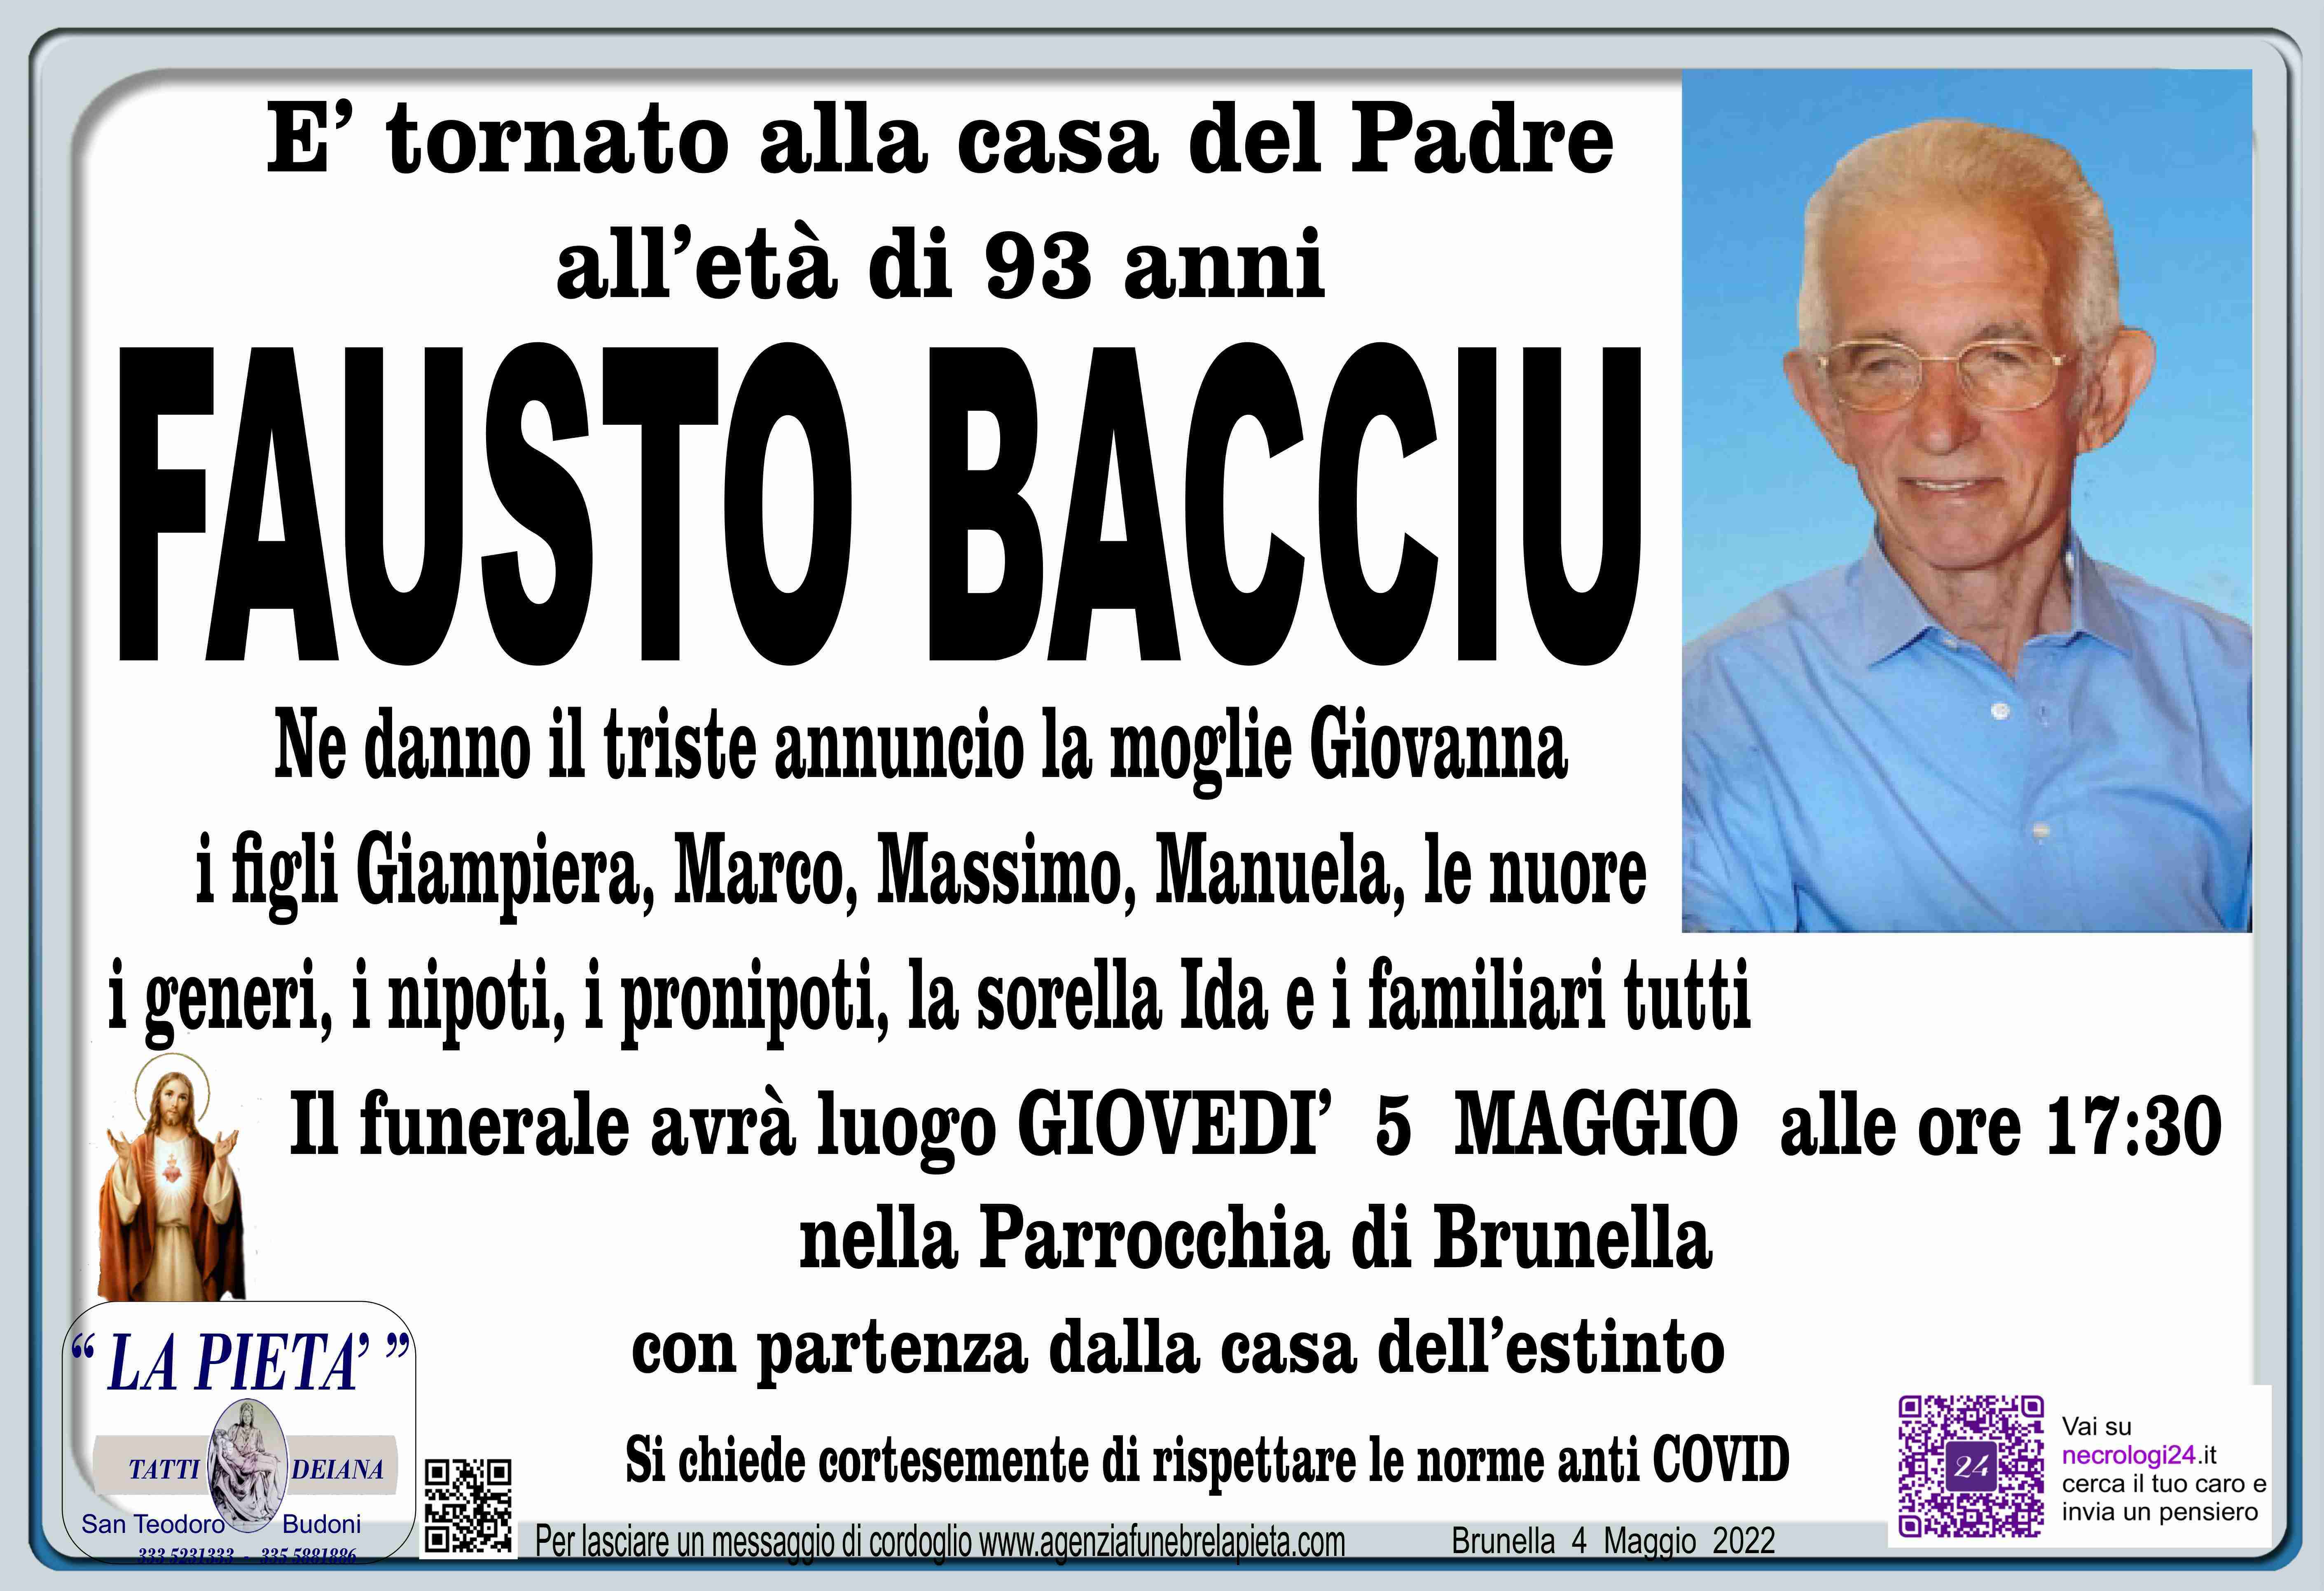 Fausto Bacciu